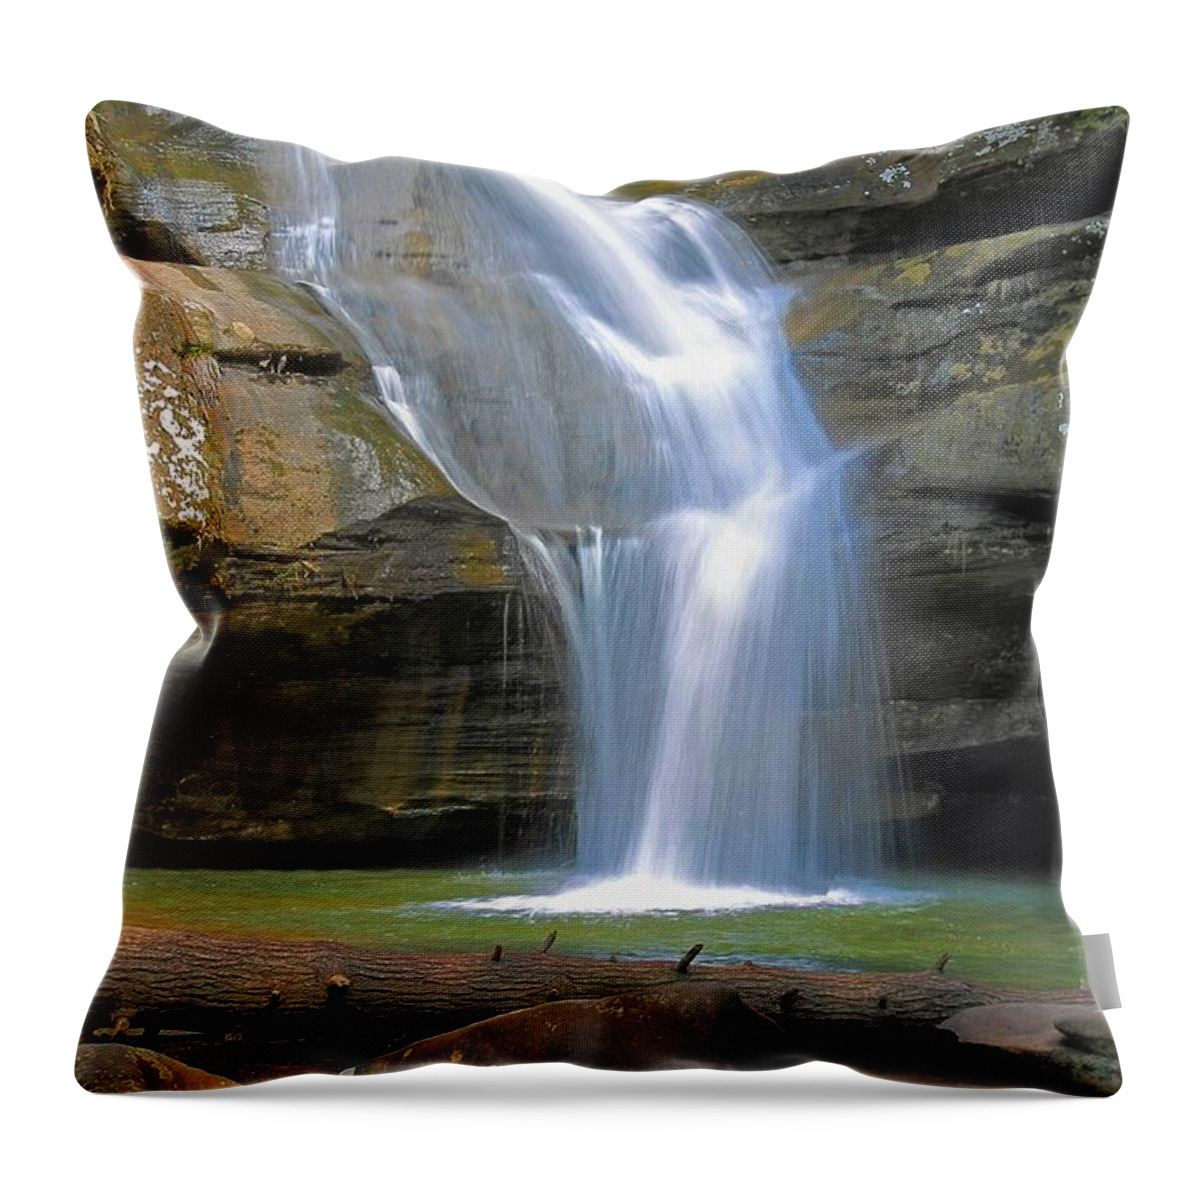 Waterfall Throw Pillow featuring the photograph Cedar Falls Landscape by Angela Murdock